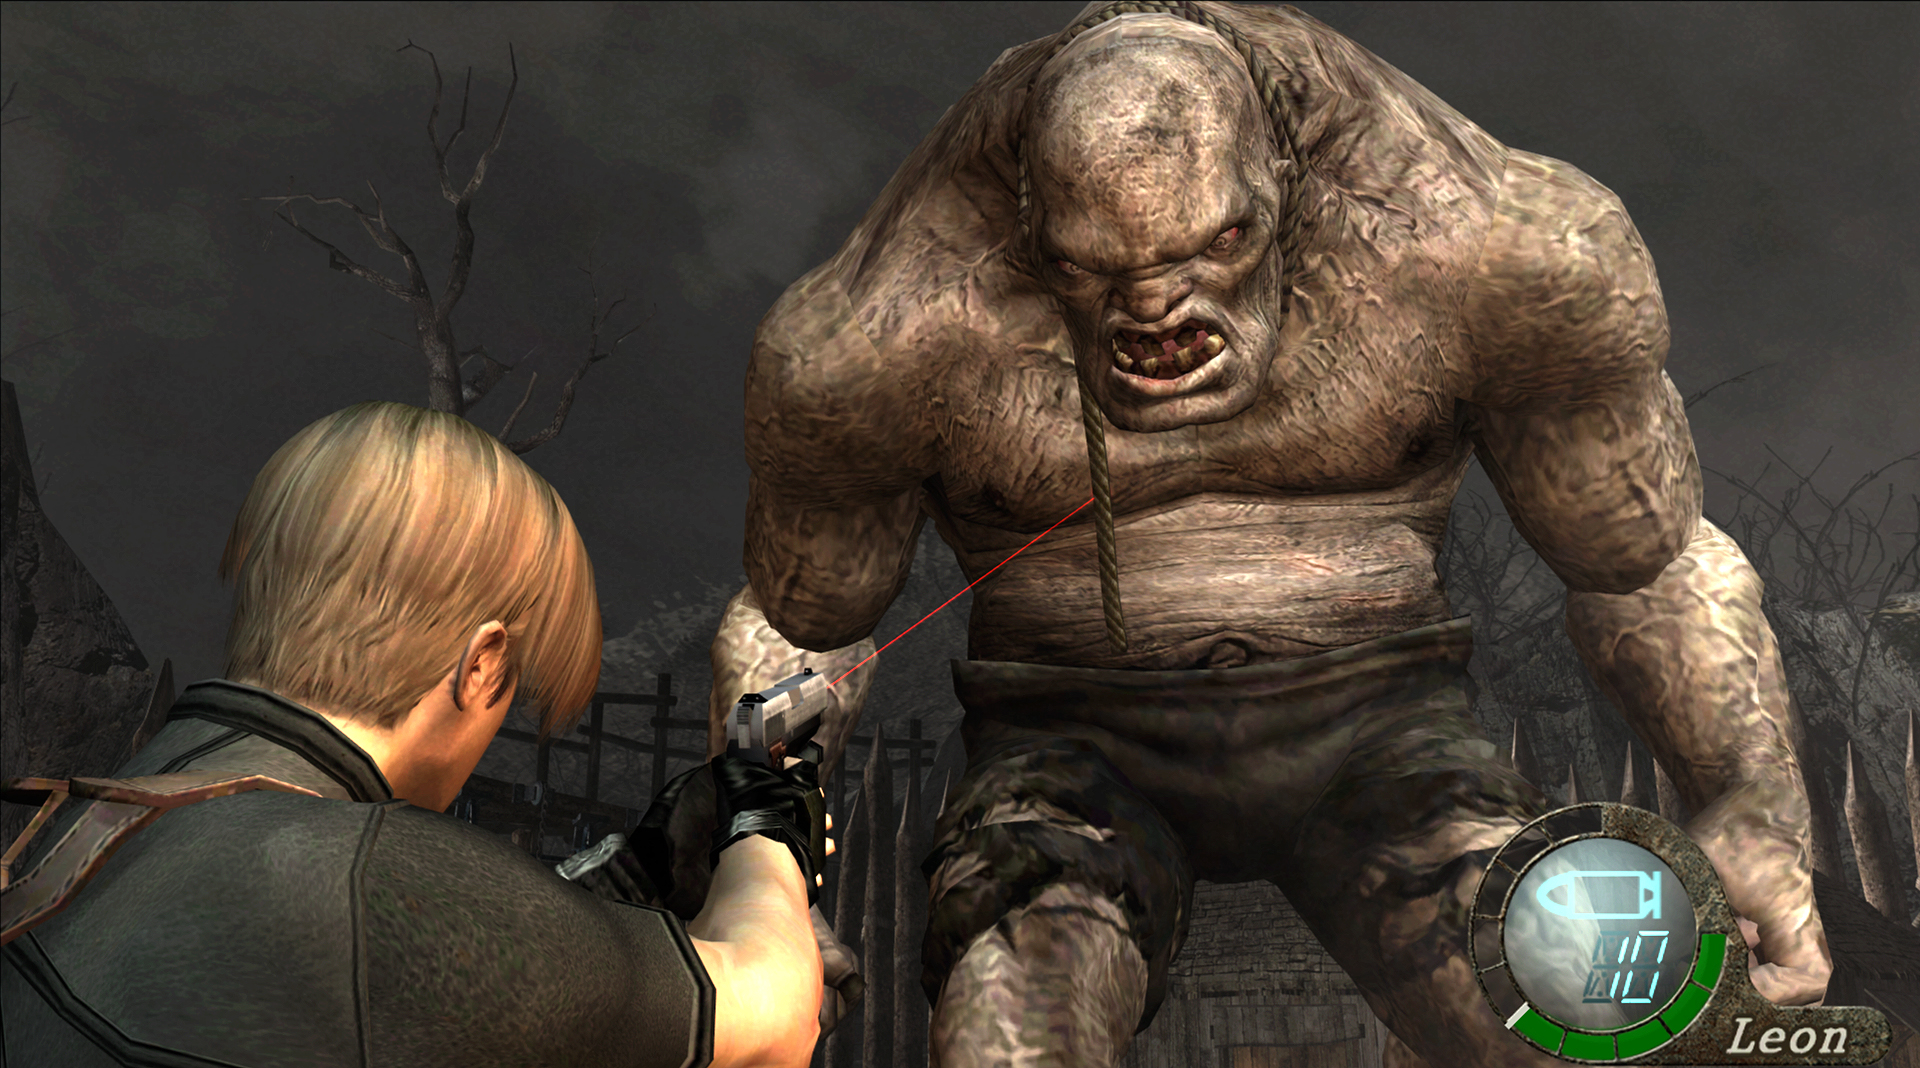 Save 75% on Resident Evil 4 (2005) on Steam